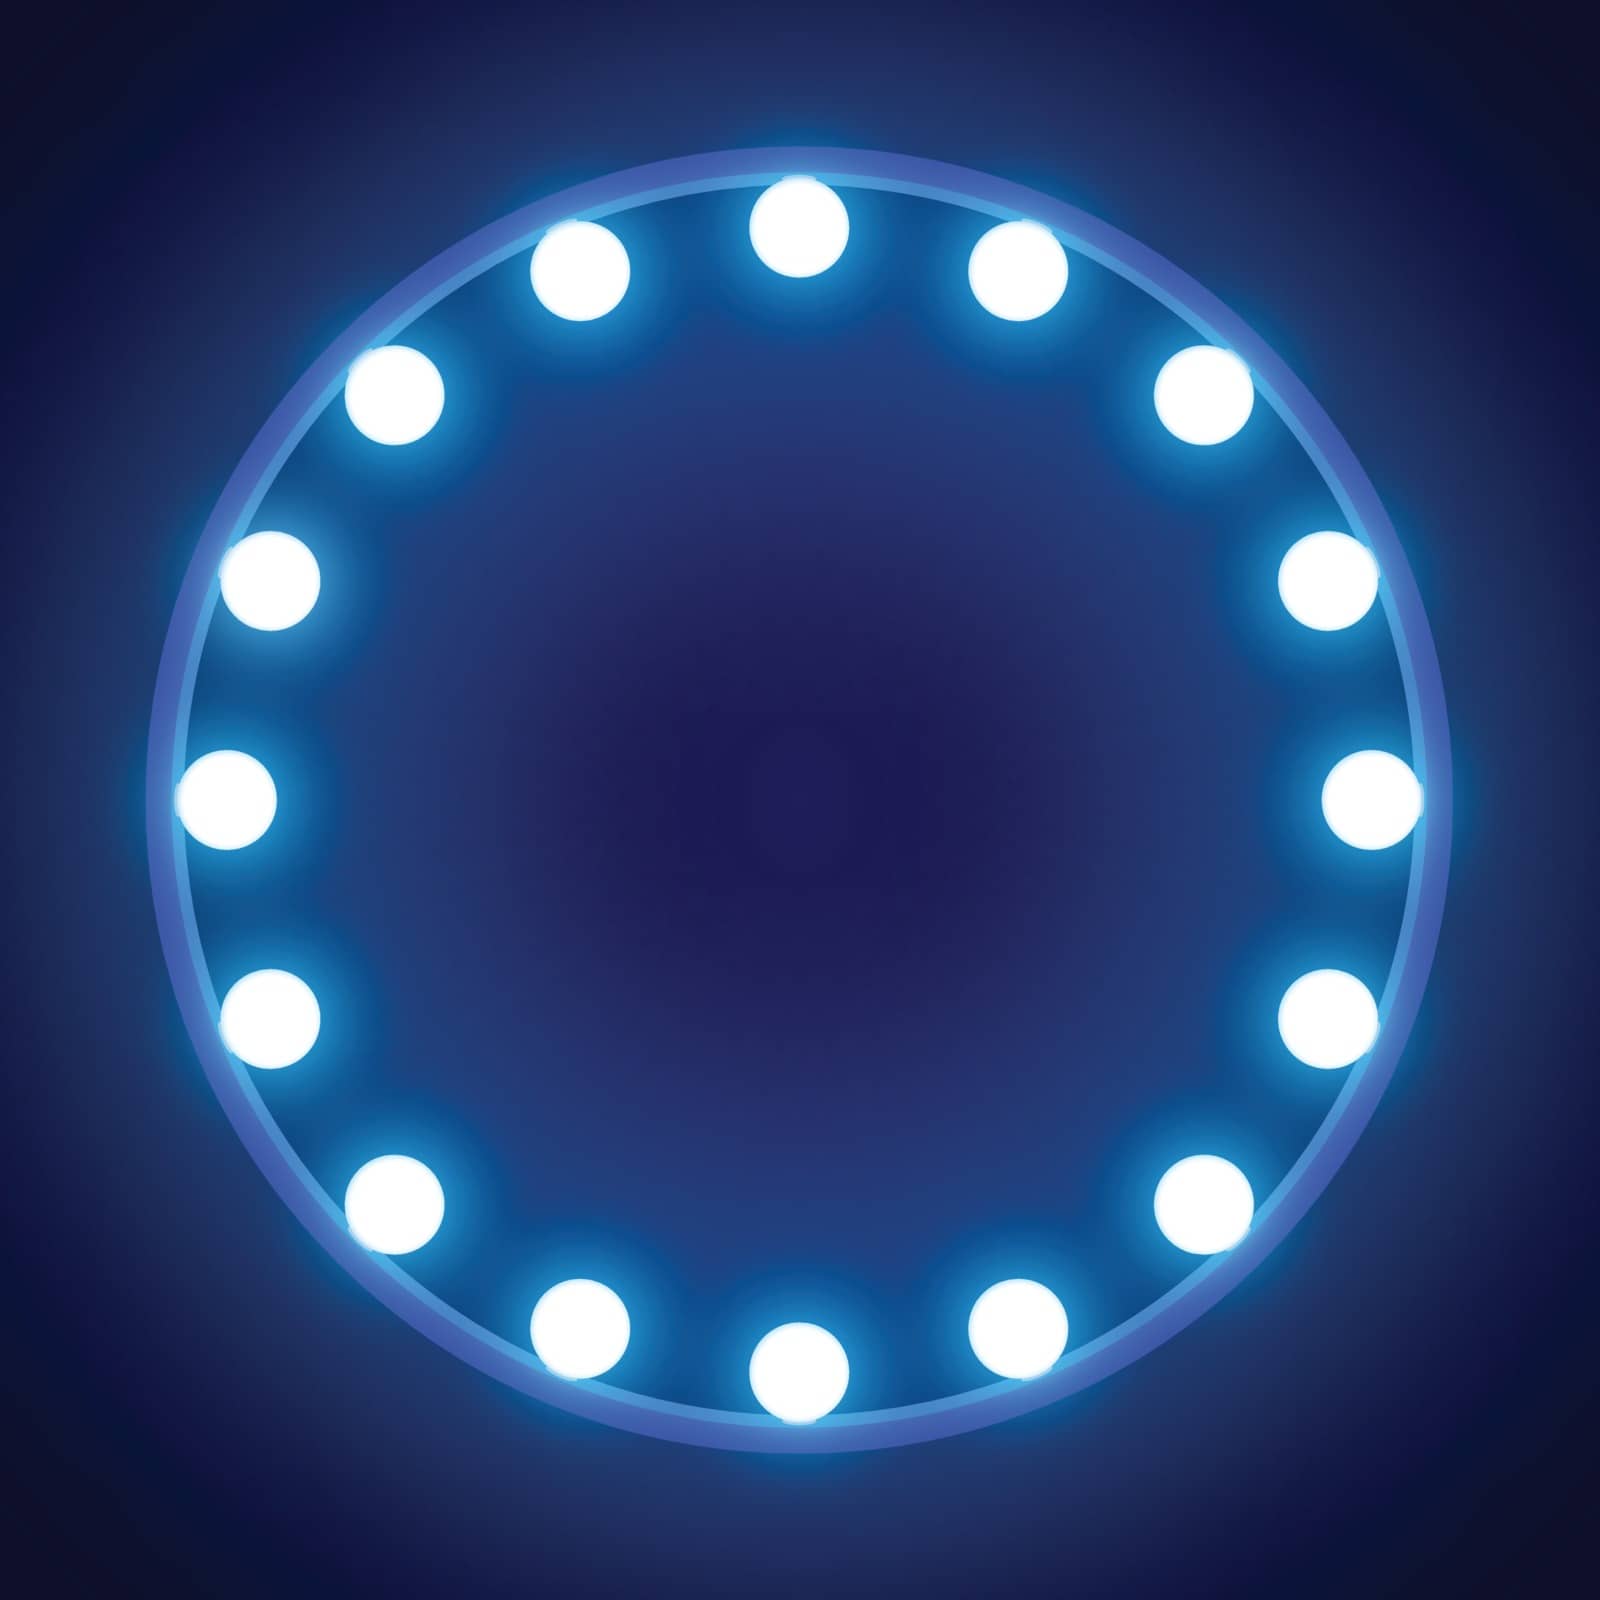 Illuminated blue round lamp. by GraffiTimi